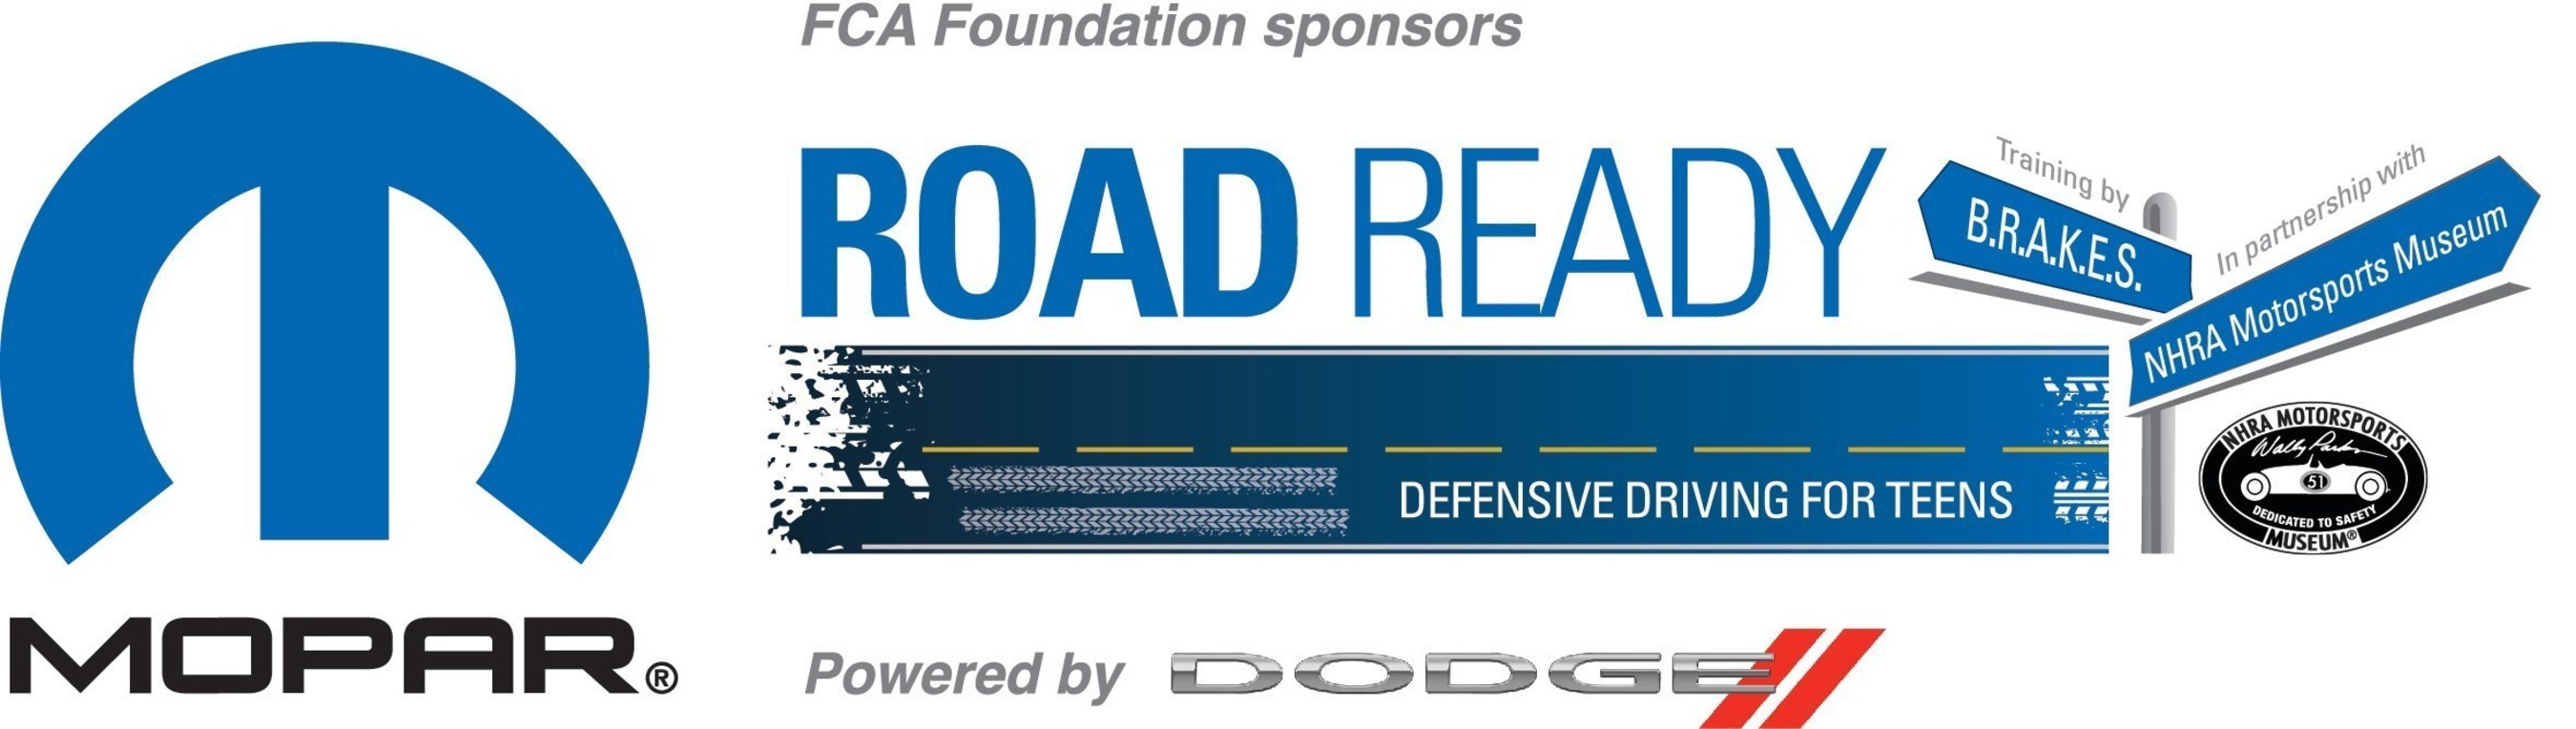 'Mopar Road Ready Powered by Dodge' Program to Help Teen Drivers in Denver Area